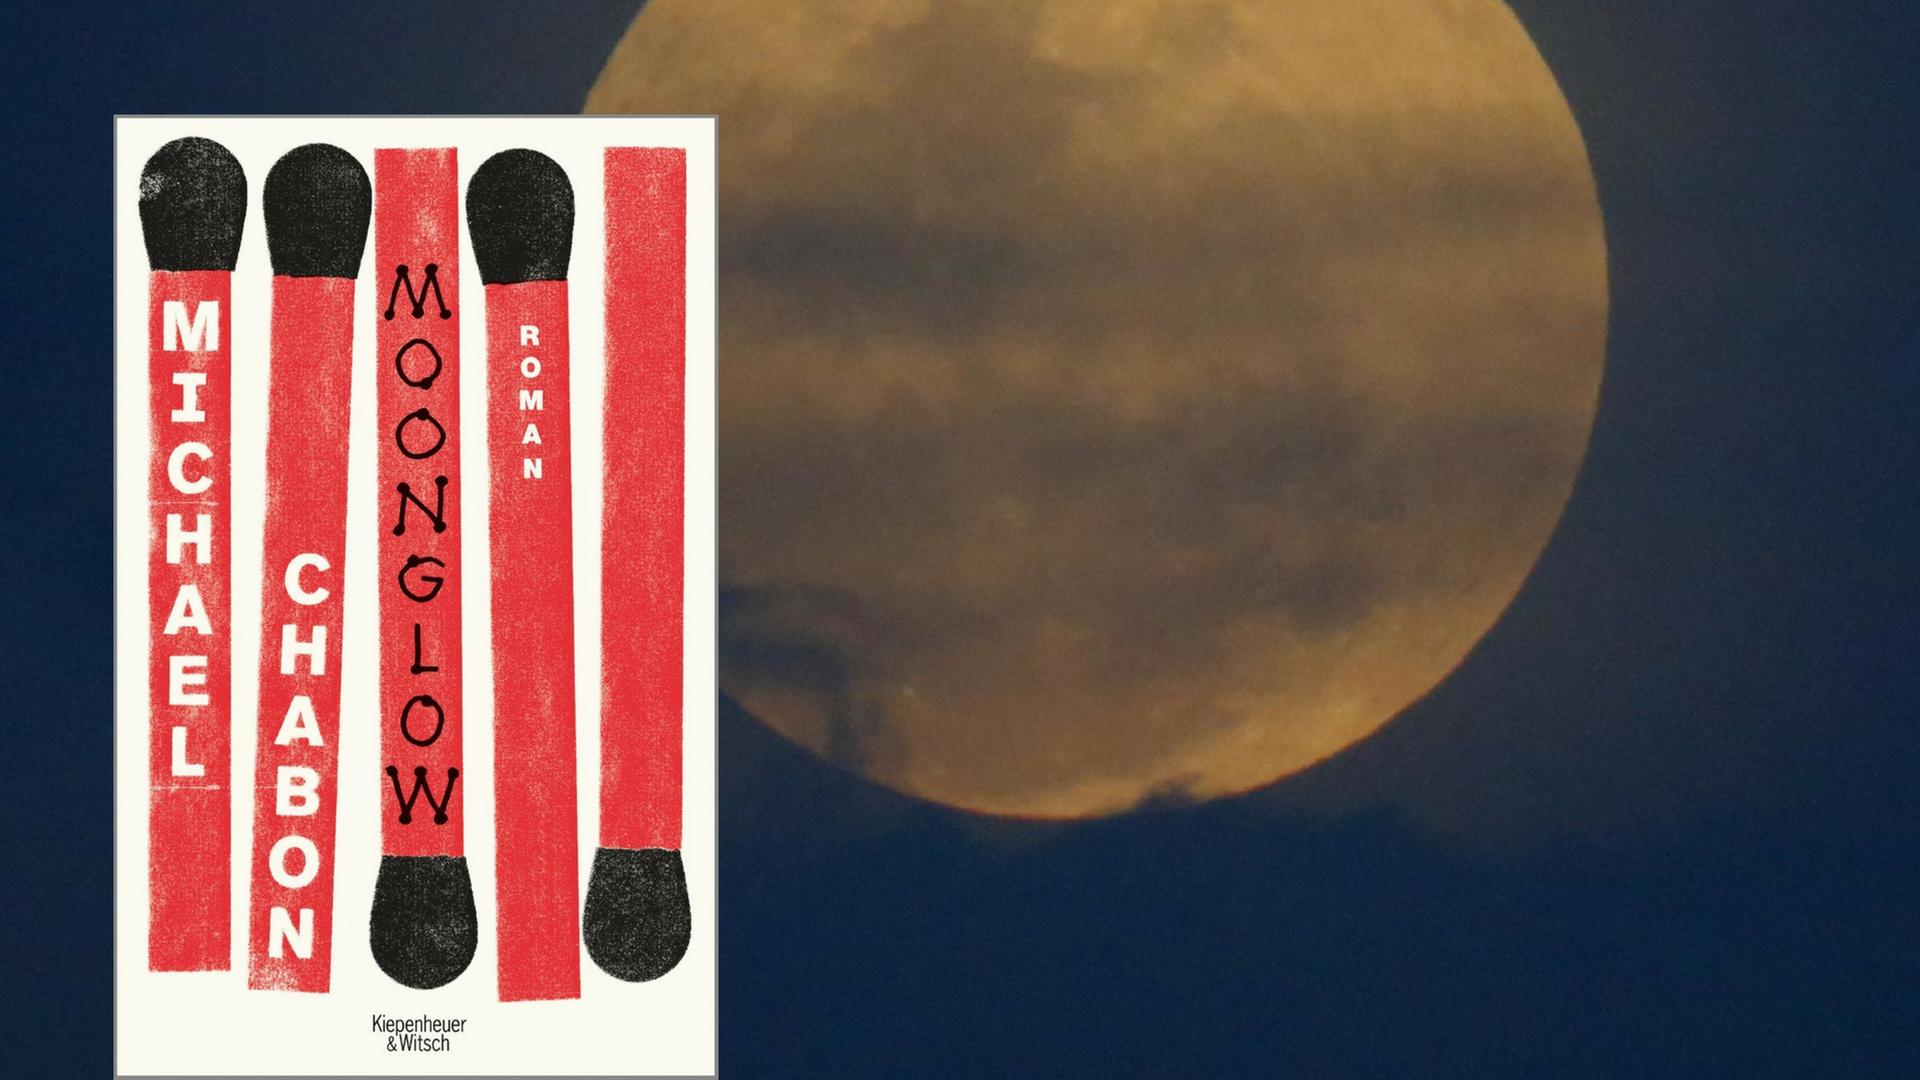 Buchcover: Michael Chabon: "Moonglow"